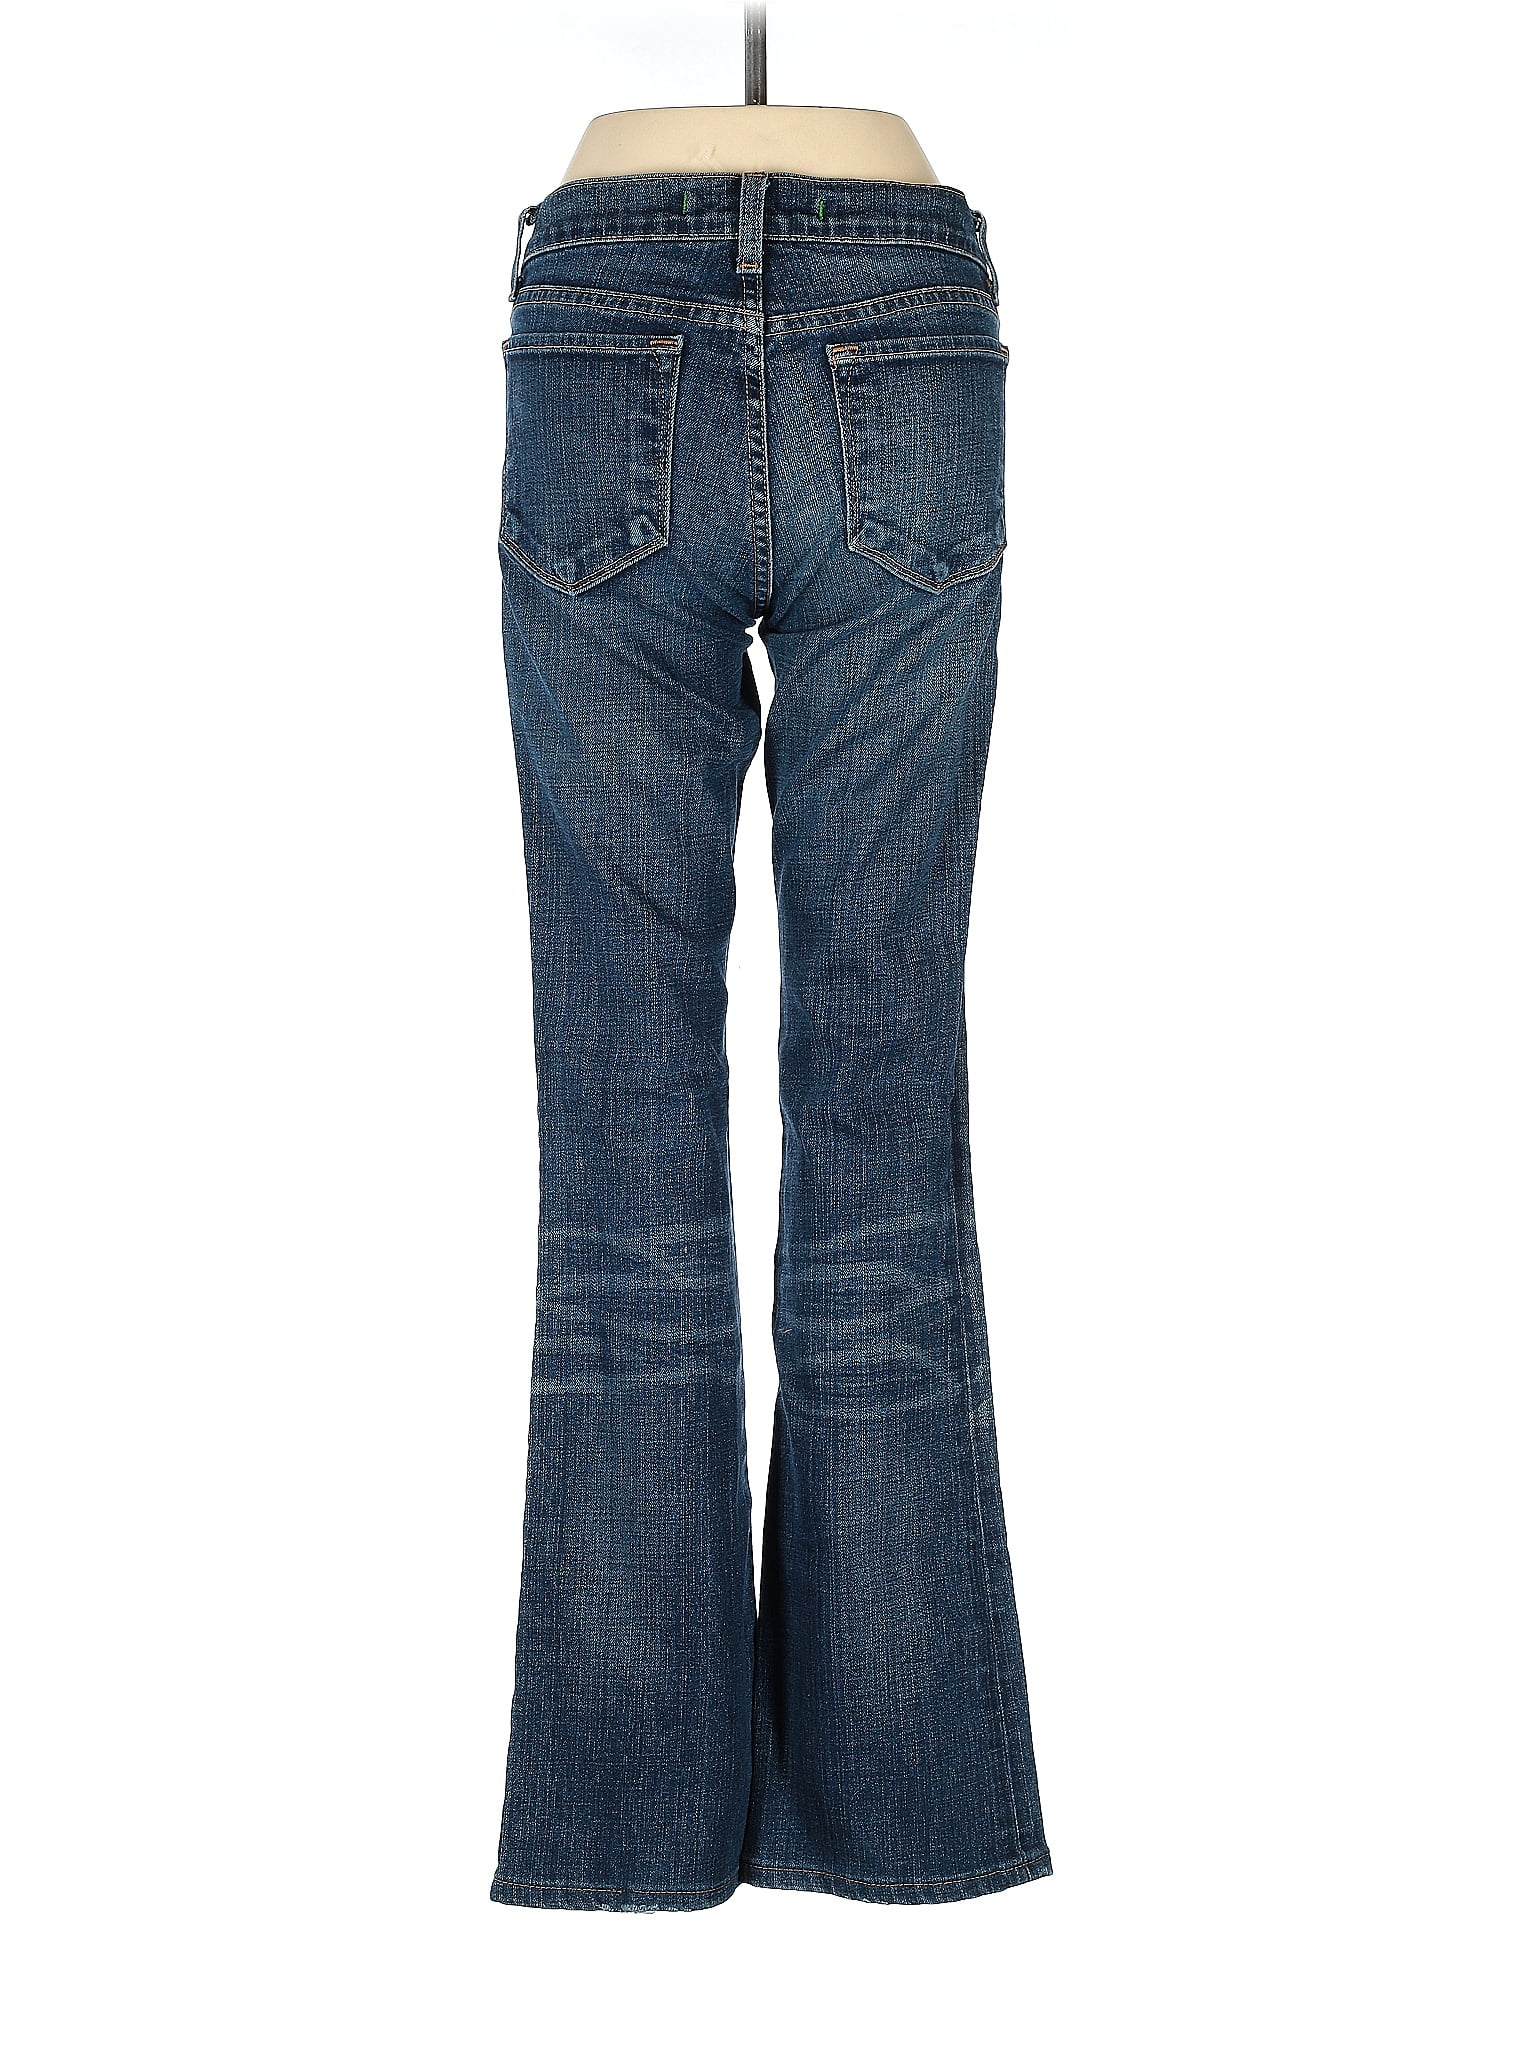 J Brand Jeans Size 27 25x26 Womens J Brand Lillie - Depop